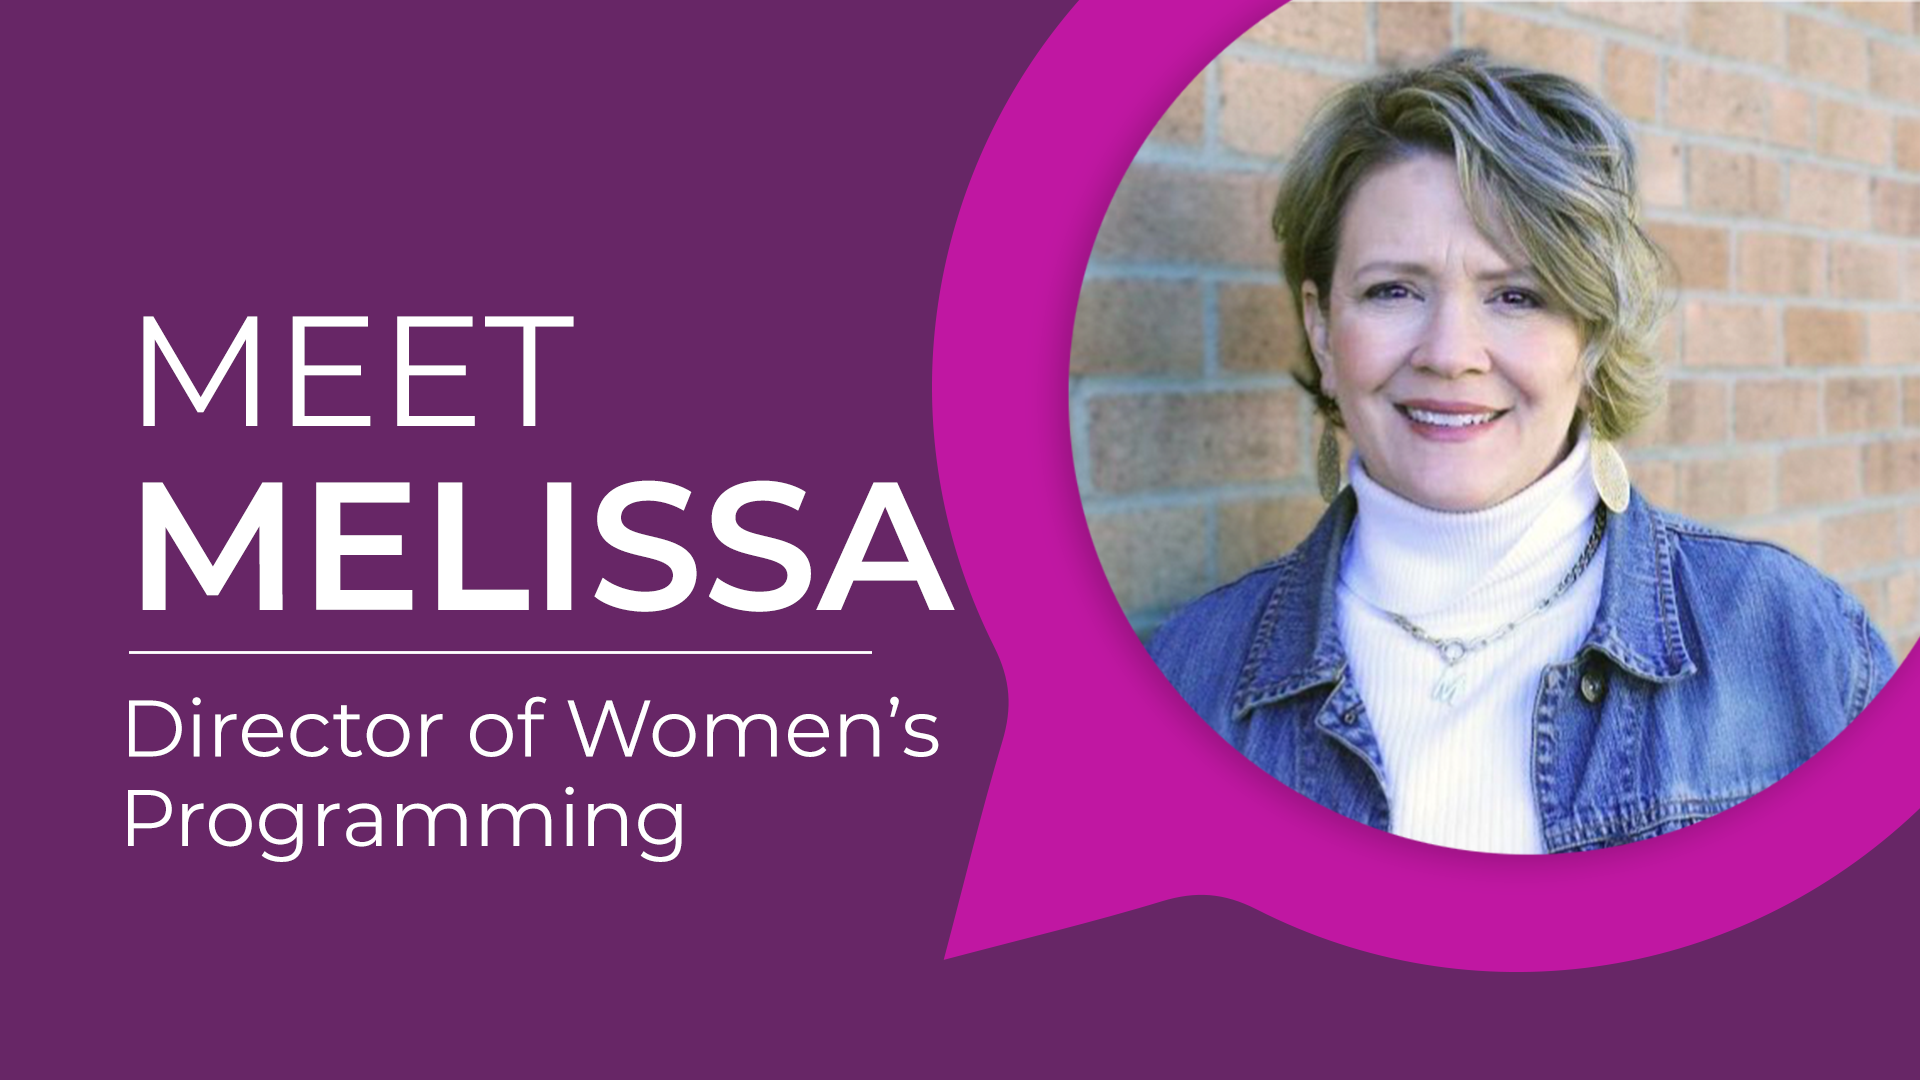 Melissa Hiatt EmBe Director of Women's Programming